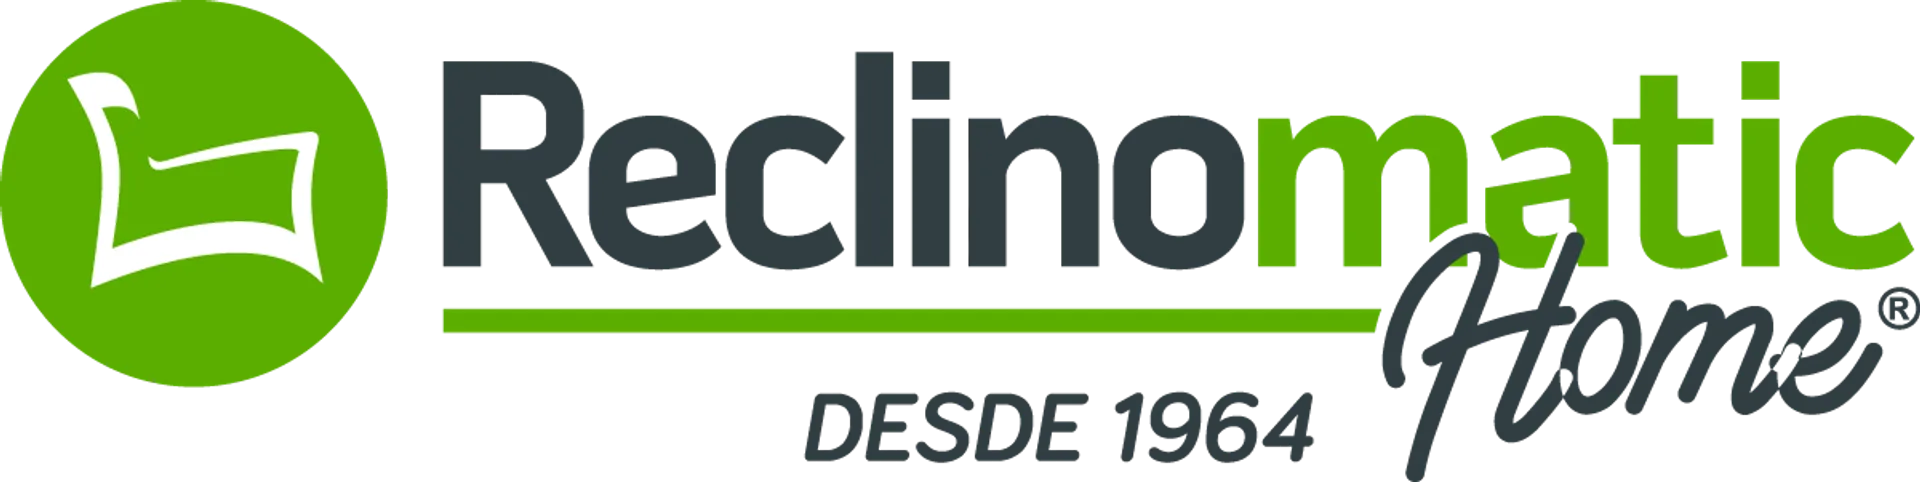 RECLINOMATIC logo